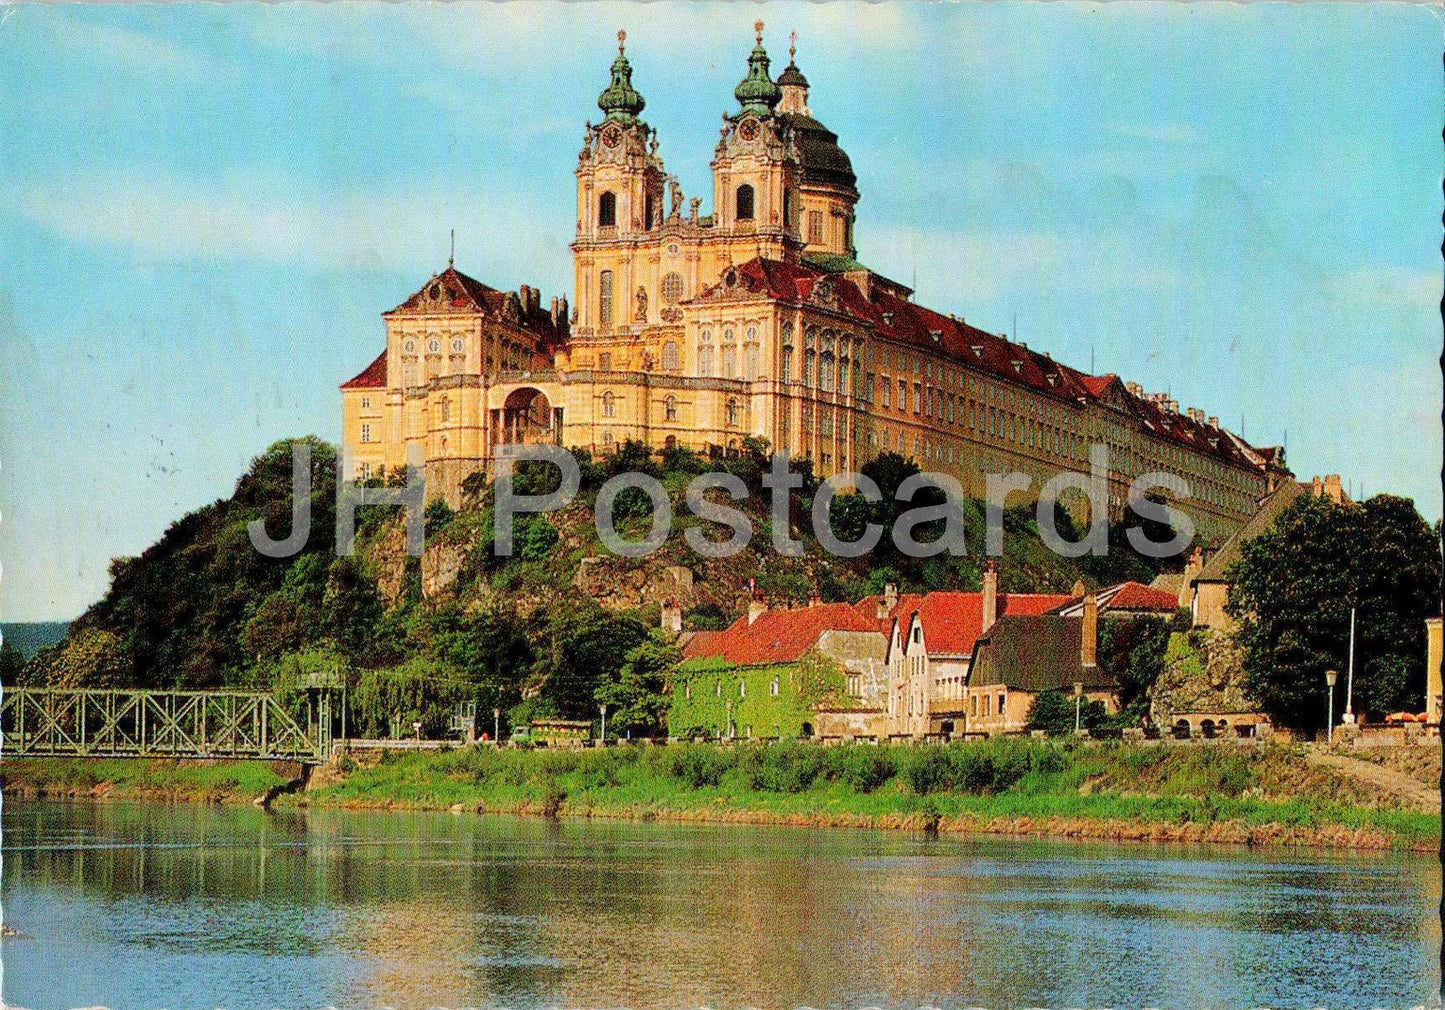 Benediktinerstift Melk a d Donau - Wachau - 76382 - Austria - used